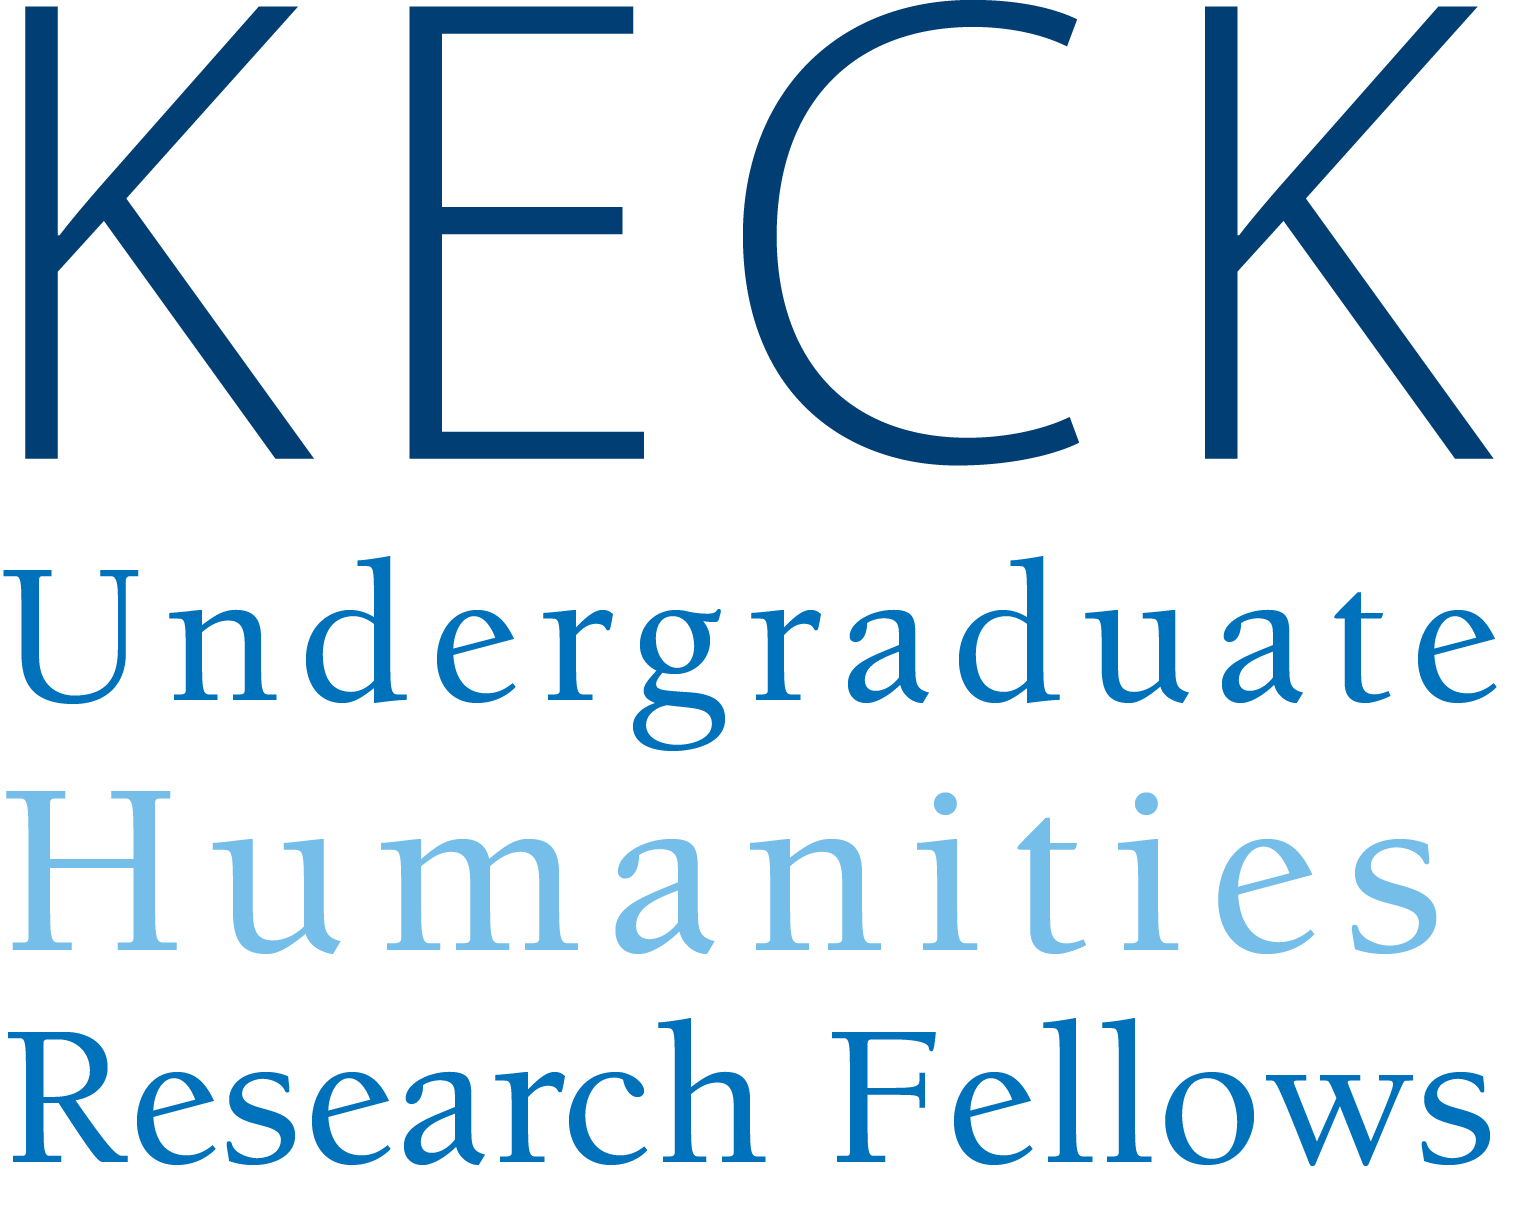 Keck Undergraduate Humanities Research Fellows